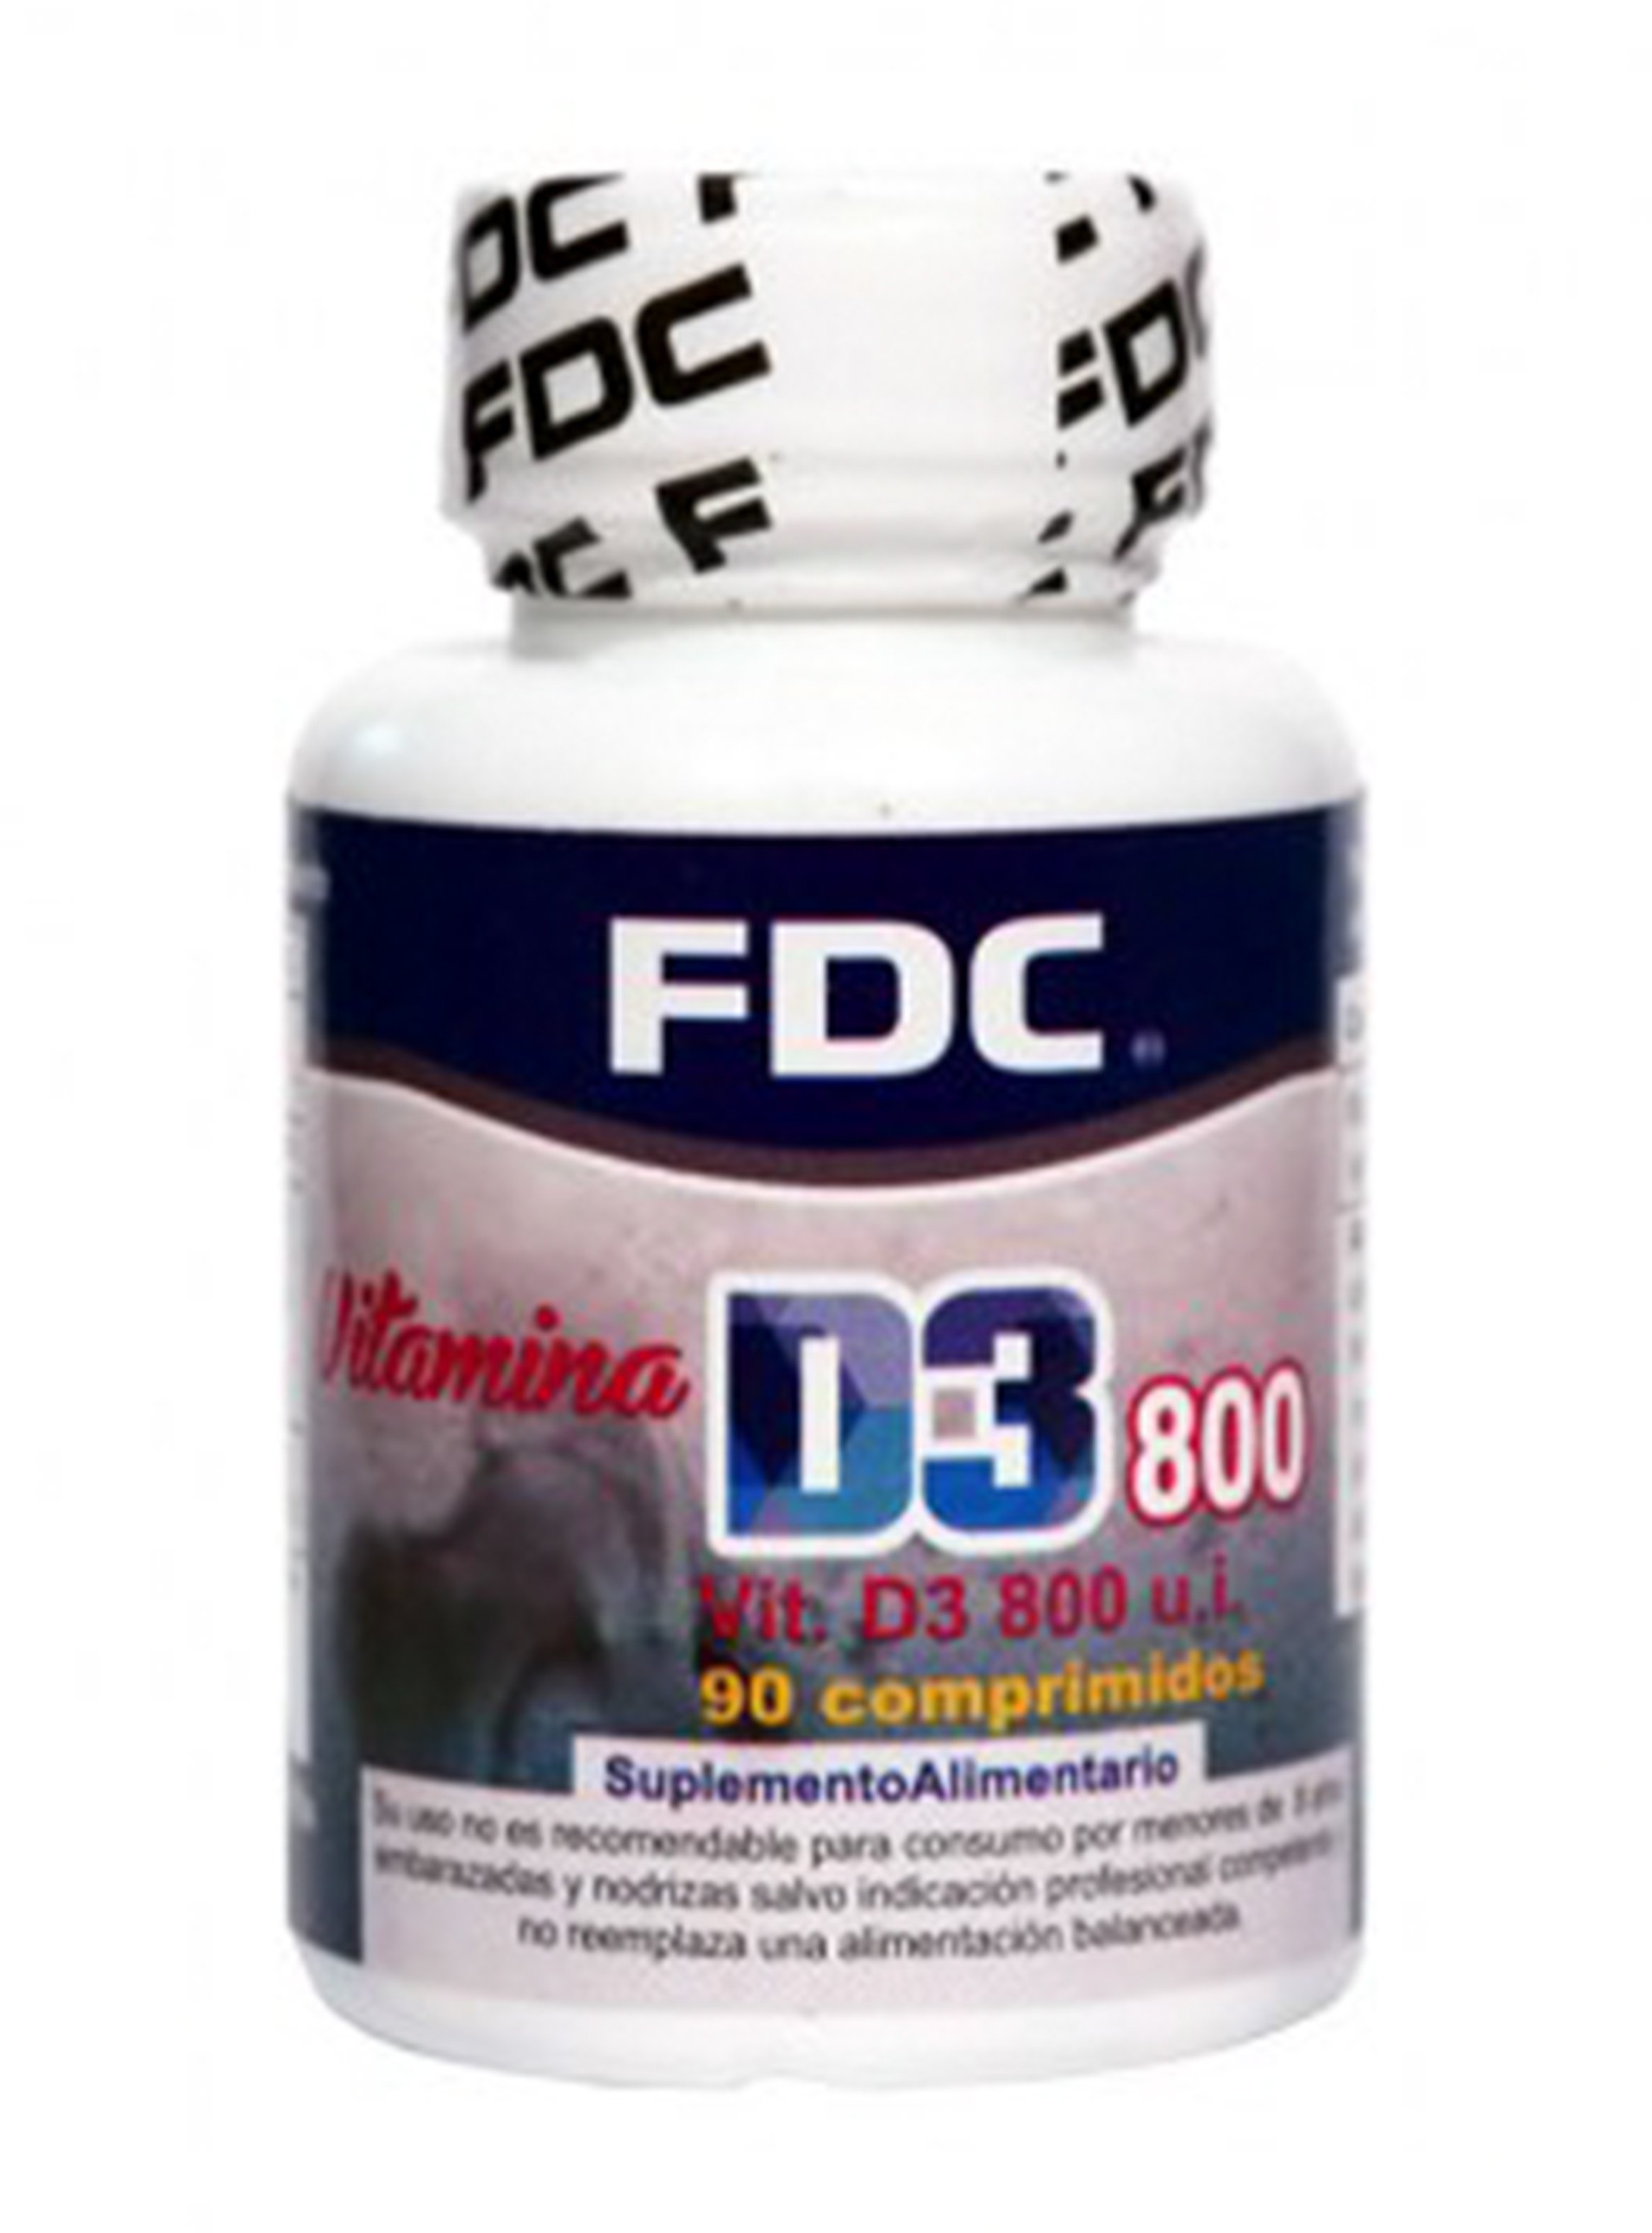 Vitamina FDC D3 800 u.i.